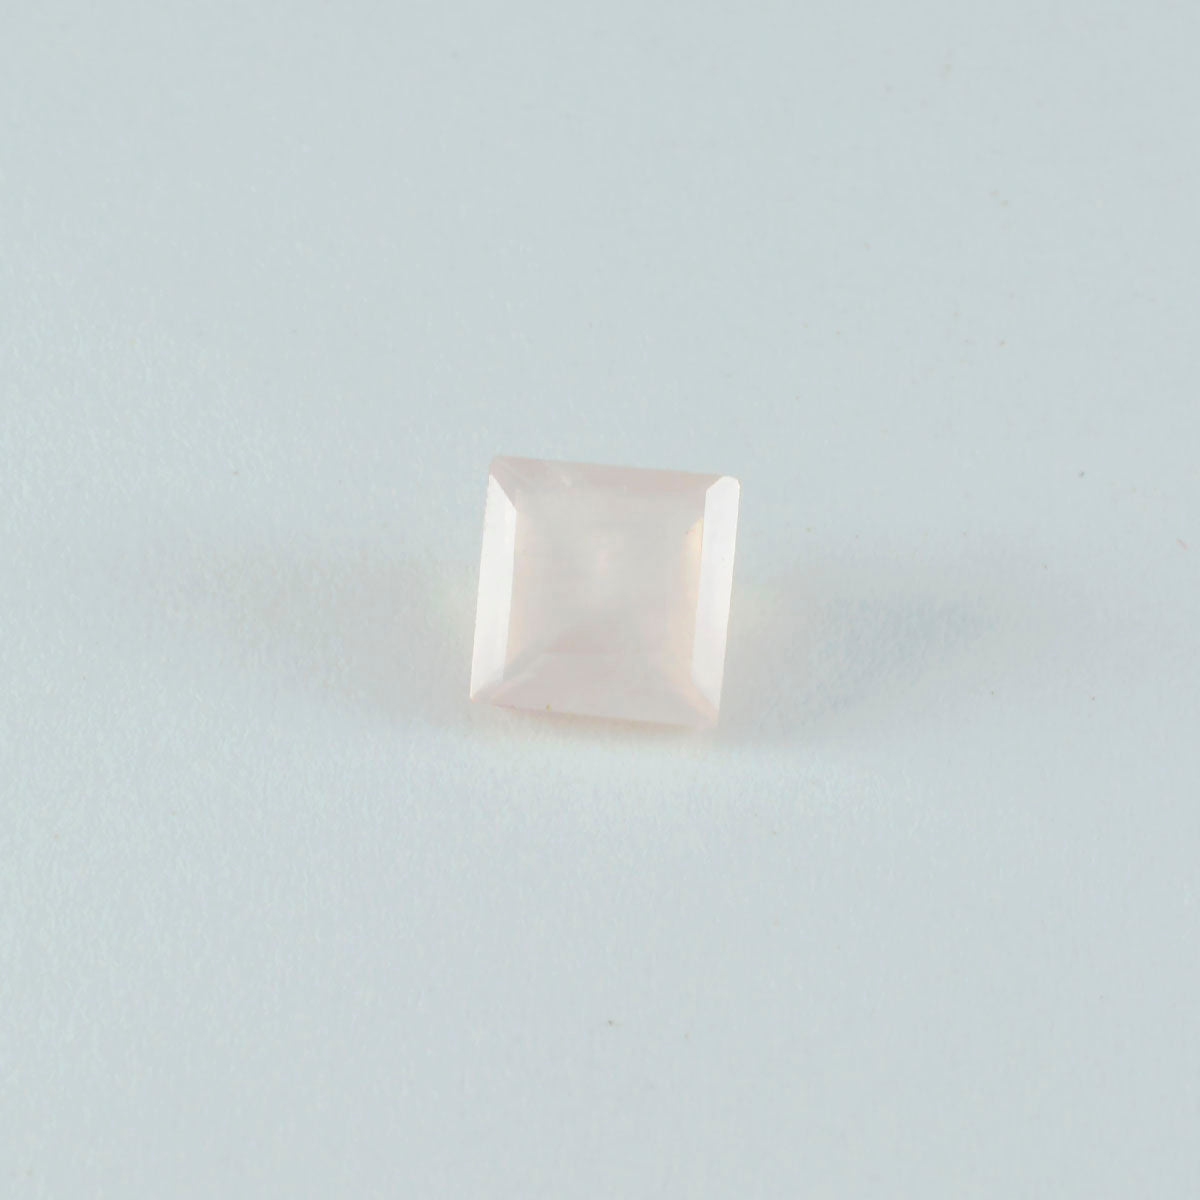 Riyogems 1PC Pink Rose Quartz Faceted 11x11 mm Square Shape wonderful Quality Loose Gems